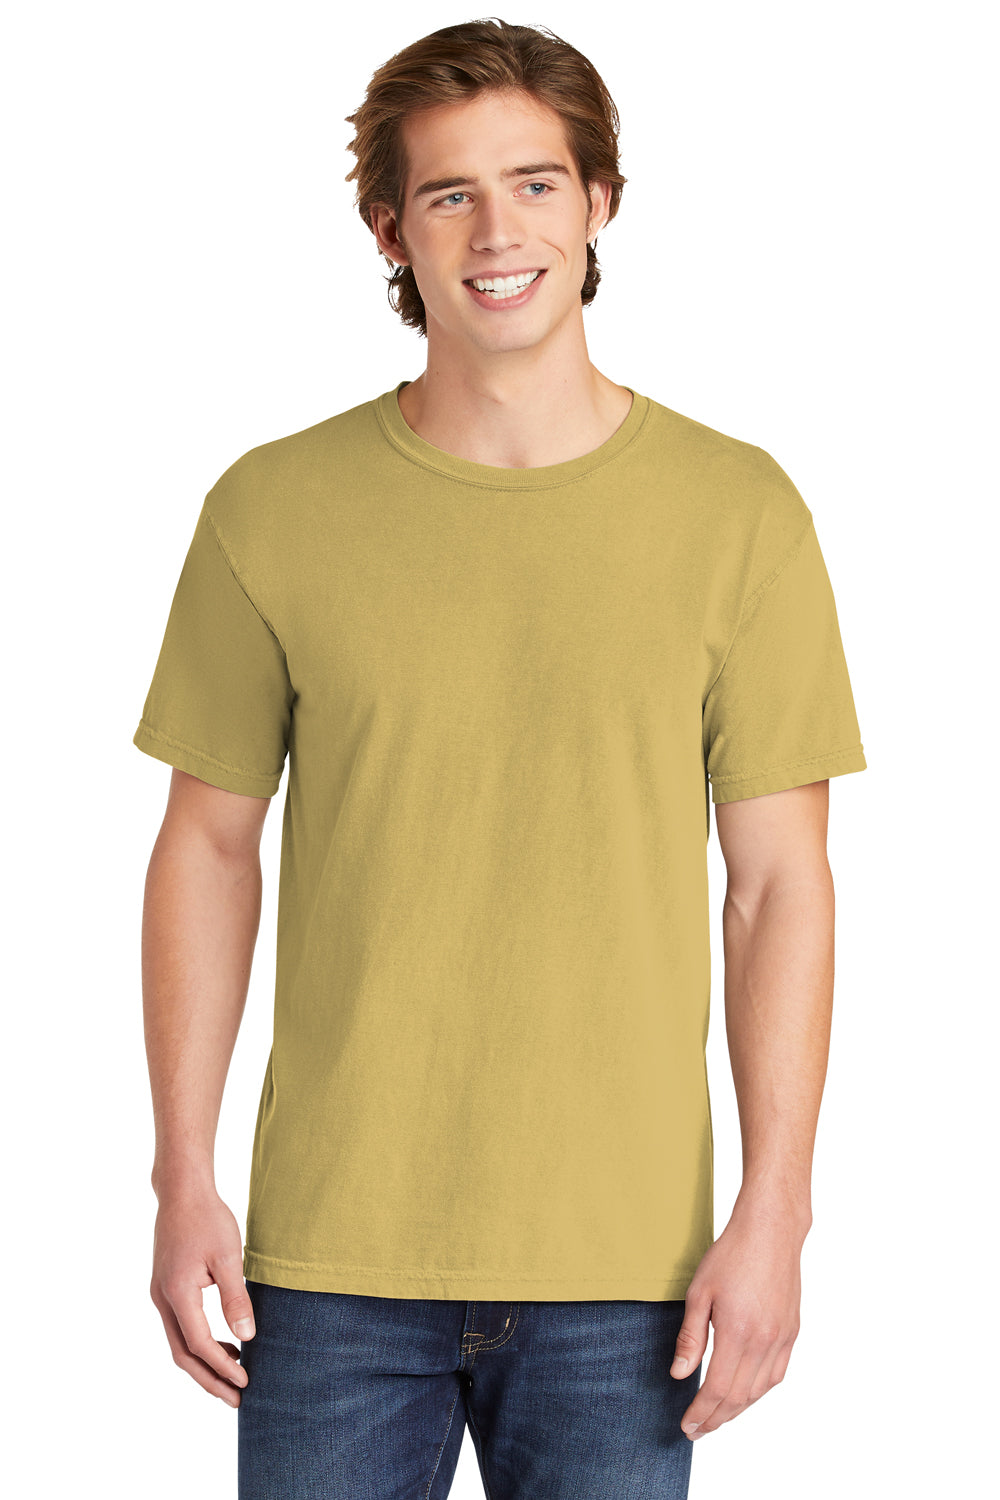 Comfort Colors 1717/C1717 Mens Short Sleeve Crewneck T-Shirt Mustard Yellow Front